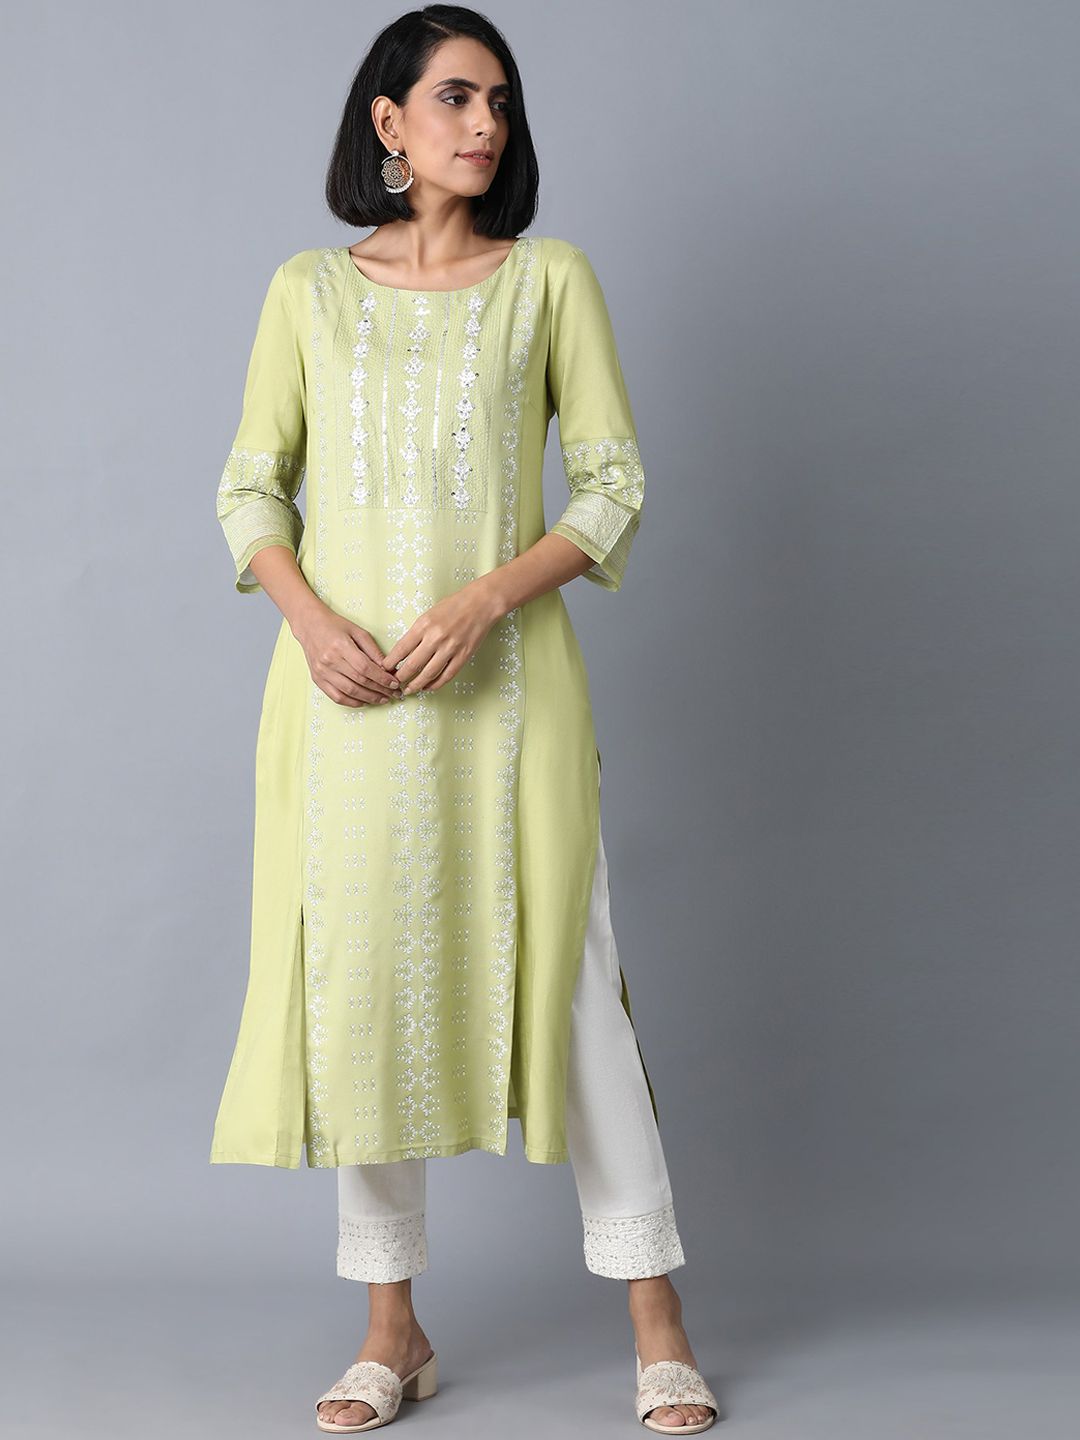 W Women Green & White Floral Embroidered Thread Work Kurta Price in India